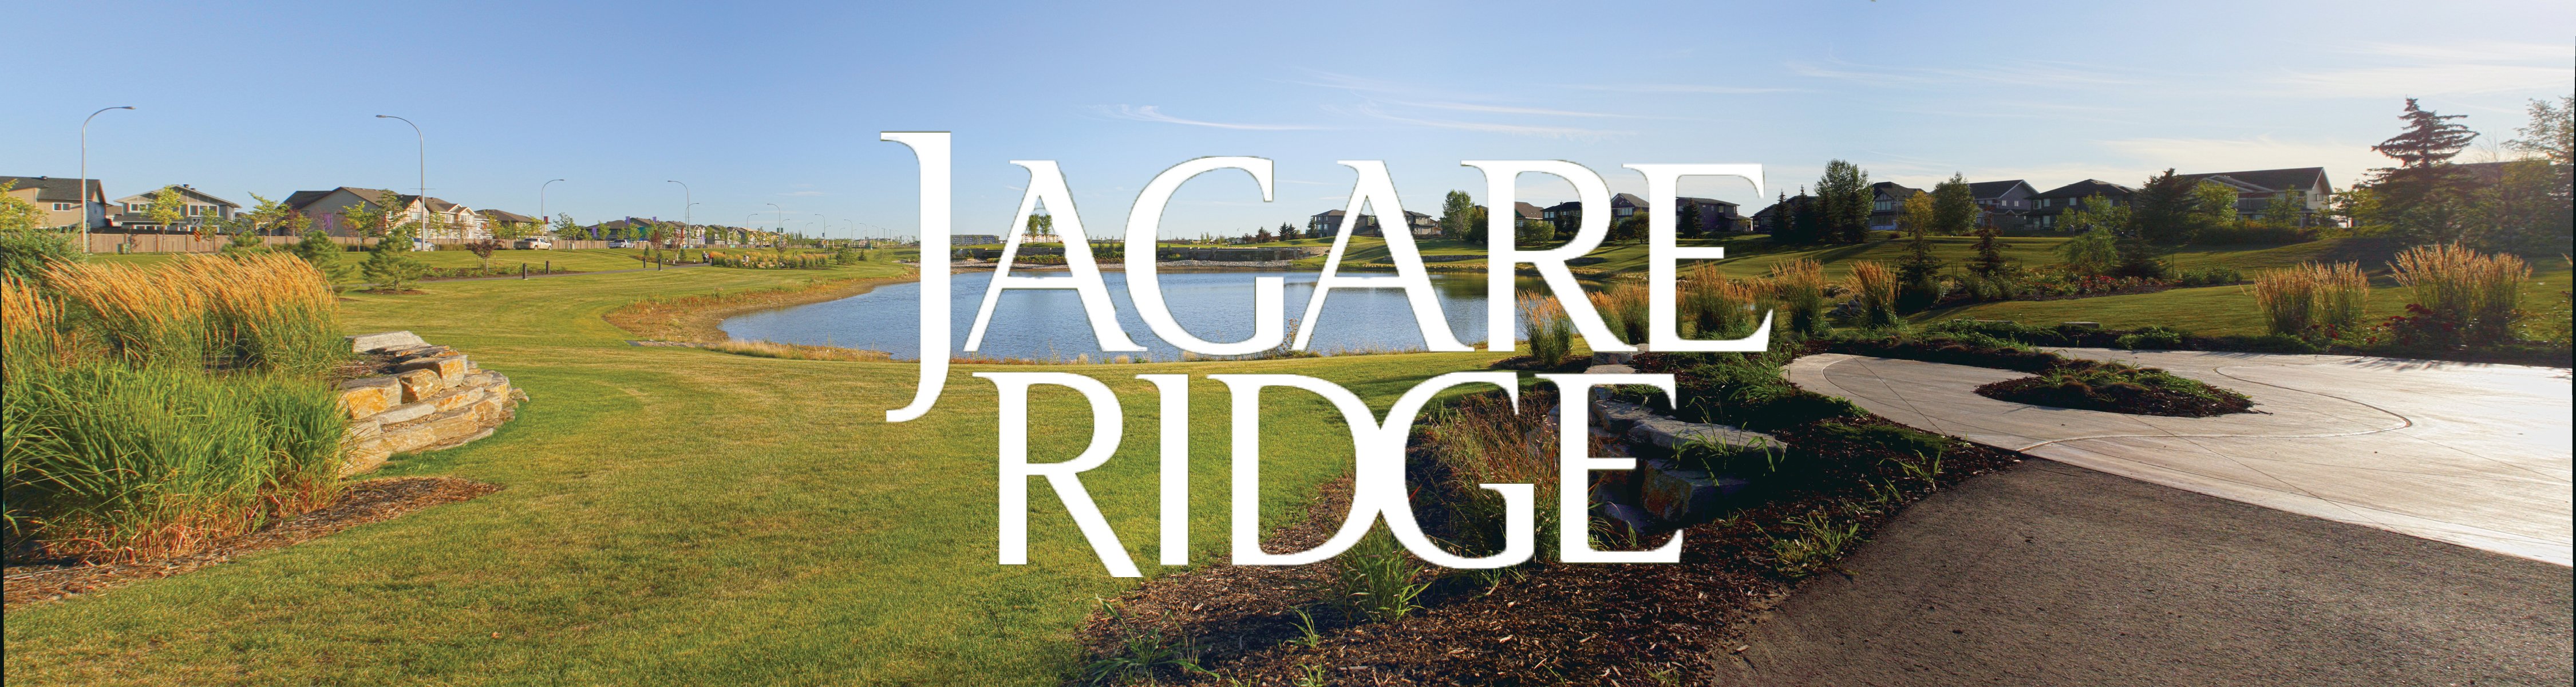 Jagare ridge banner-1